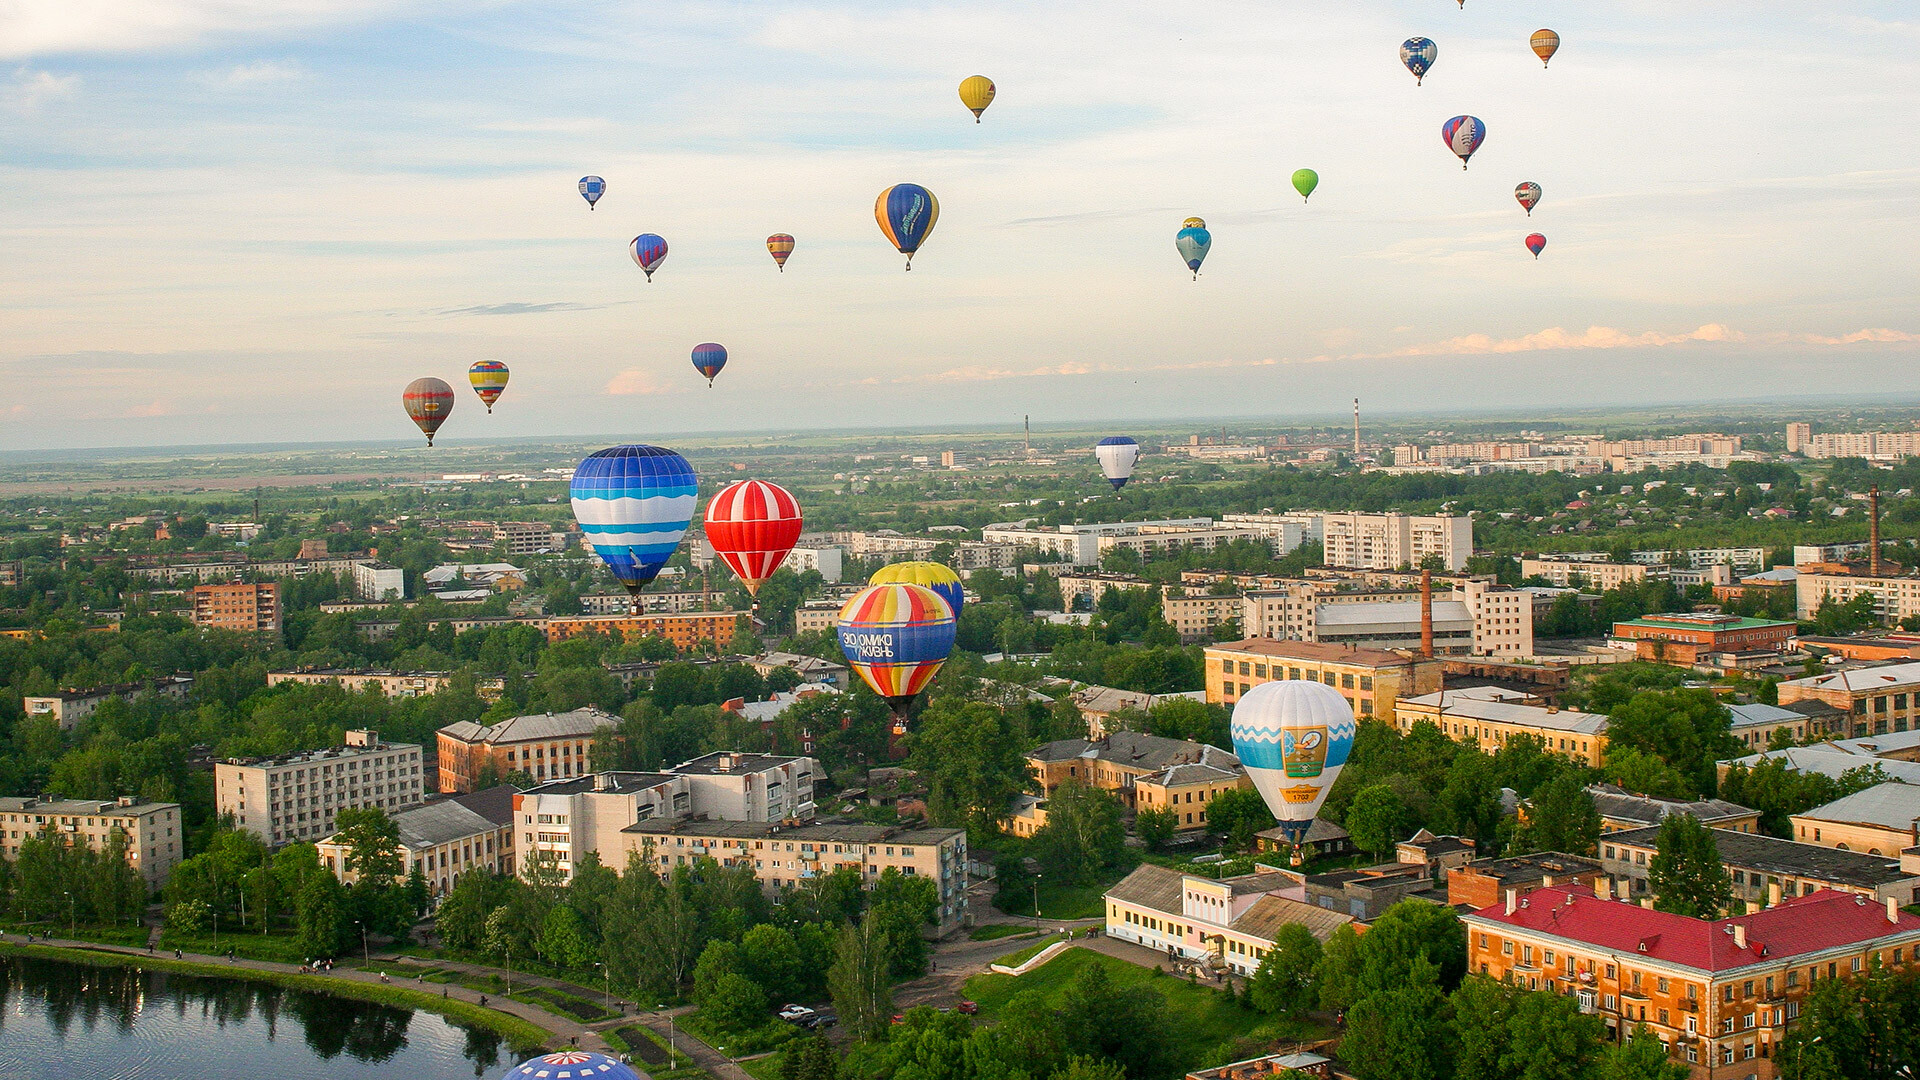 Heißluftballonfestival in Welikije Luki, Oblast Pskow